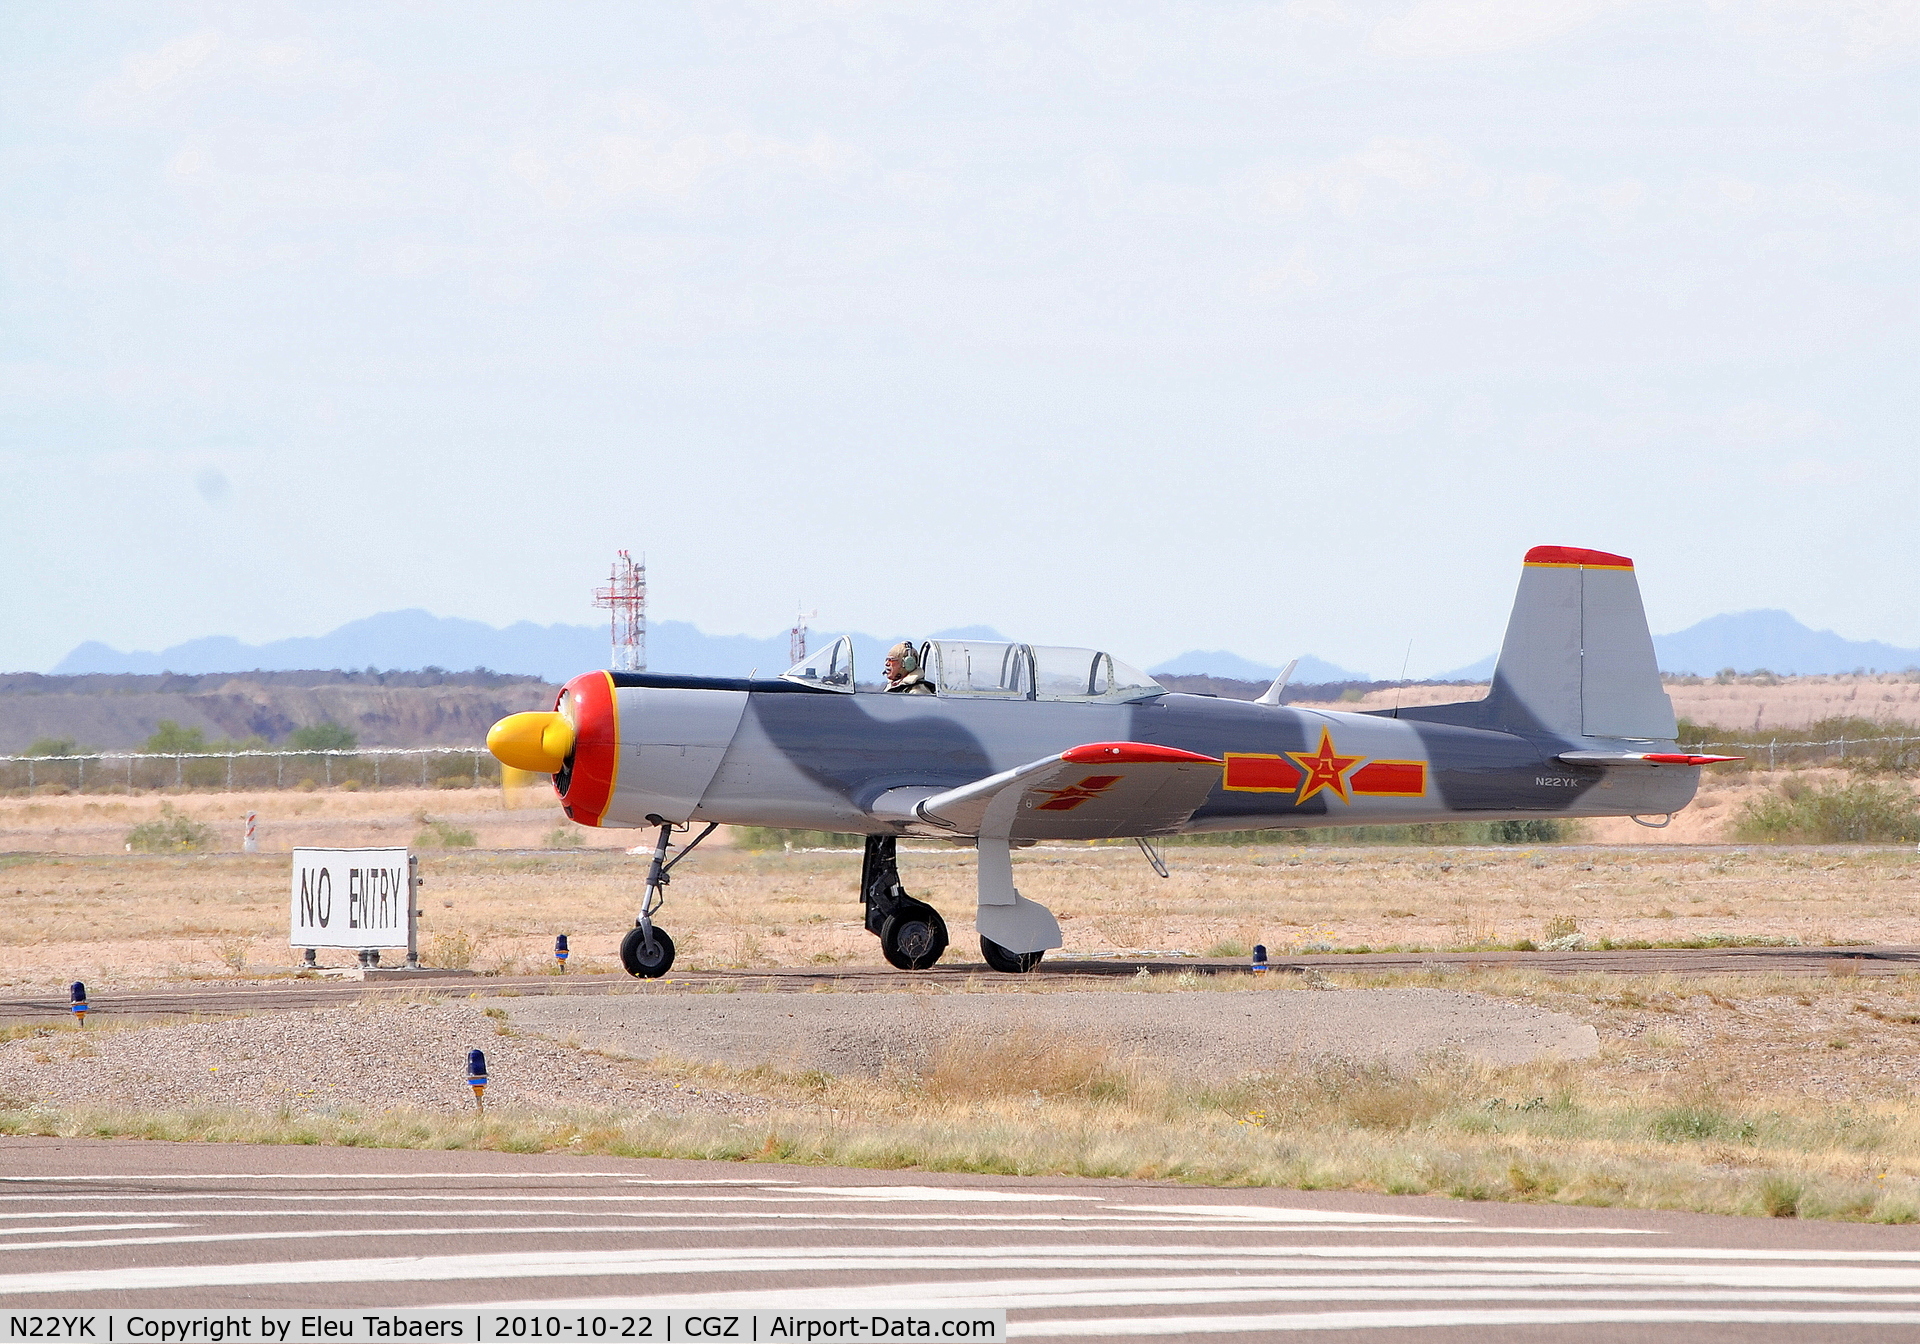 N22YK, 1974 Nanchang CJ-6 C/N 1232009, Taken at the Copperstate Fly-In in Casa Grande, Arizona.